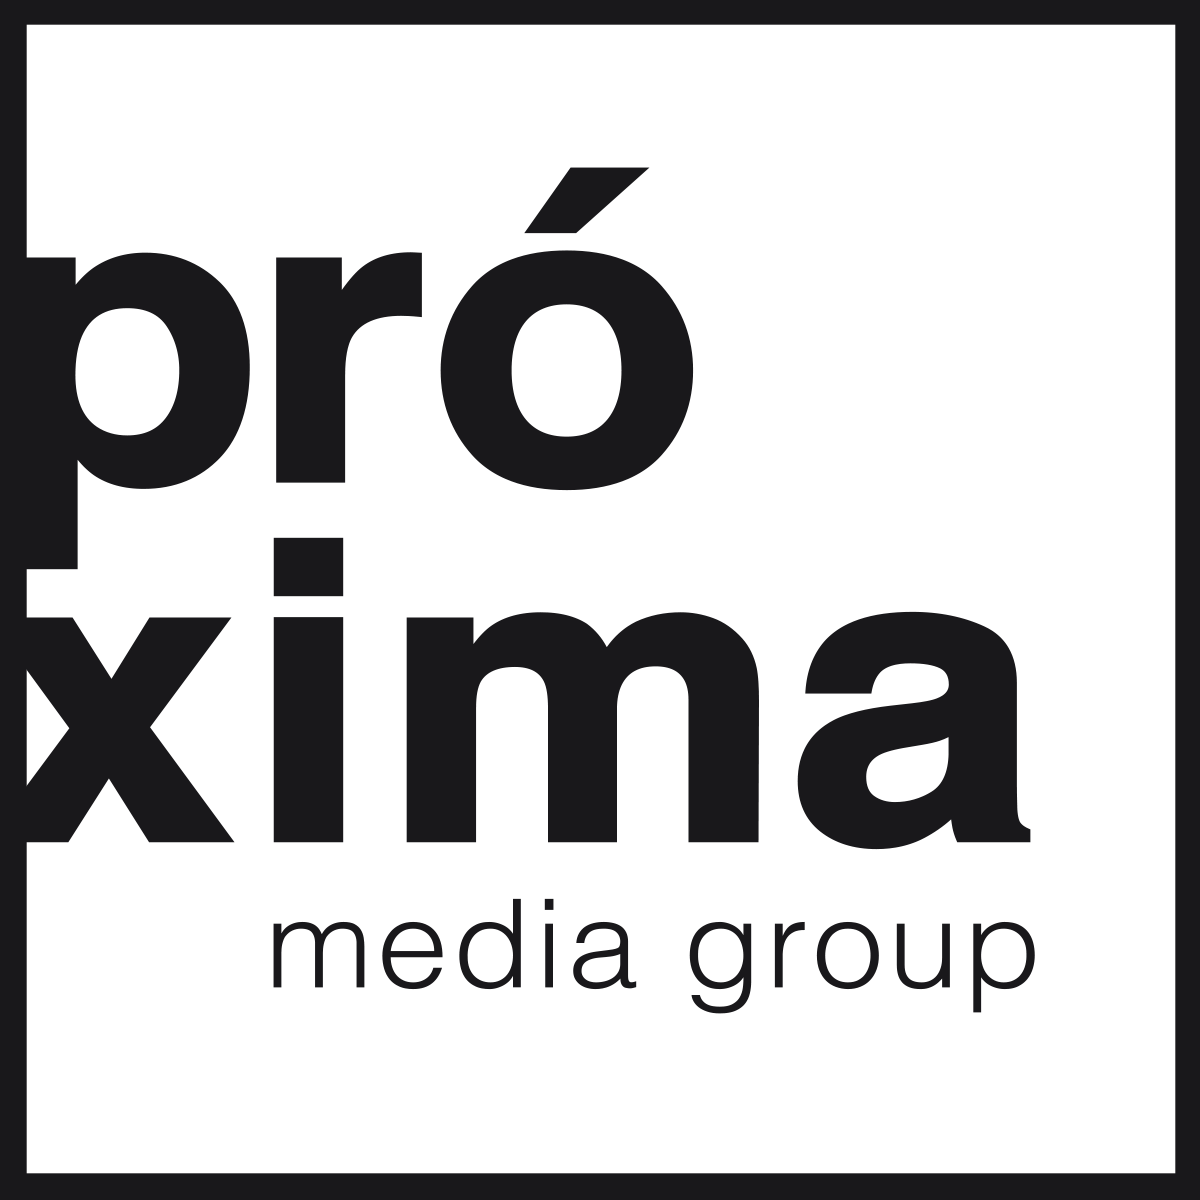 Próxima Media Group